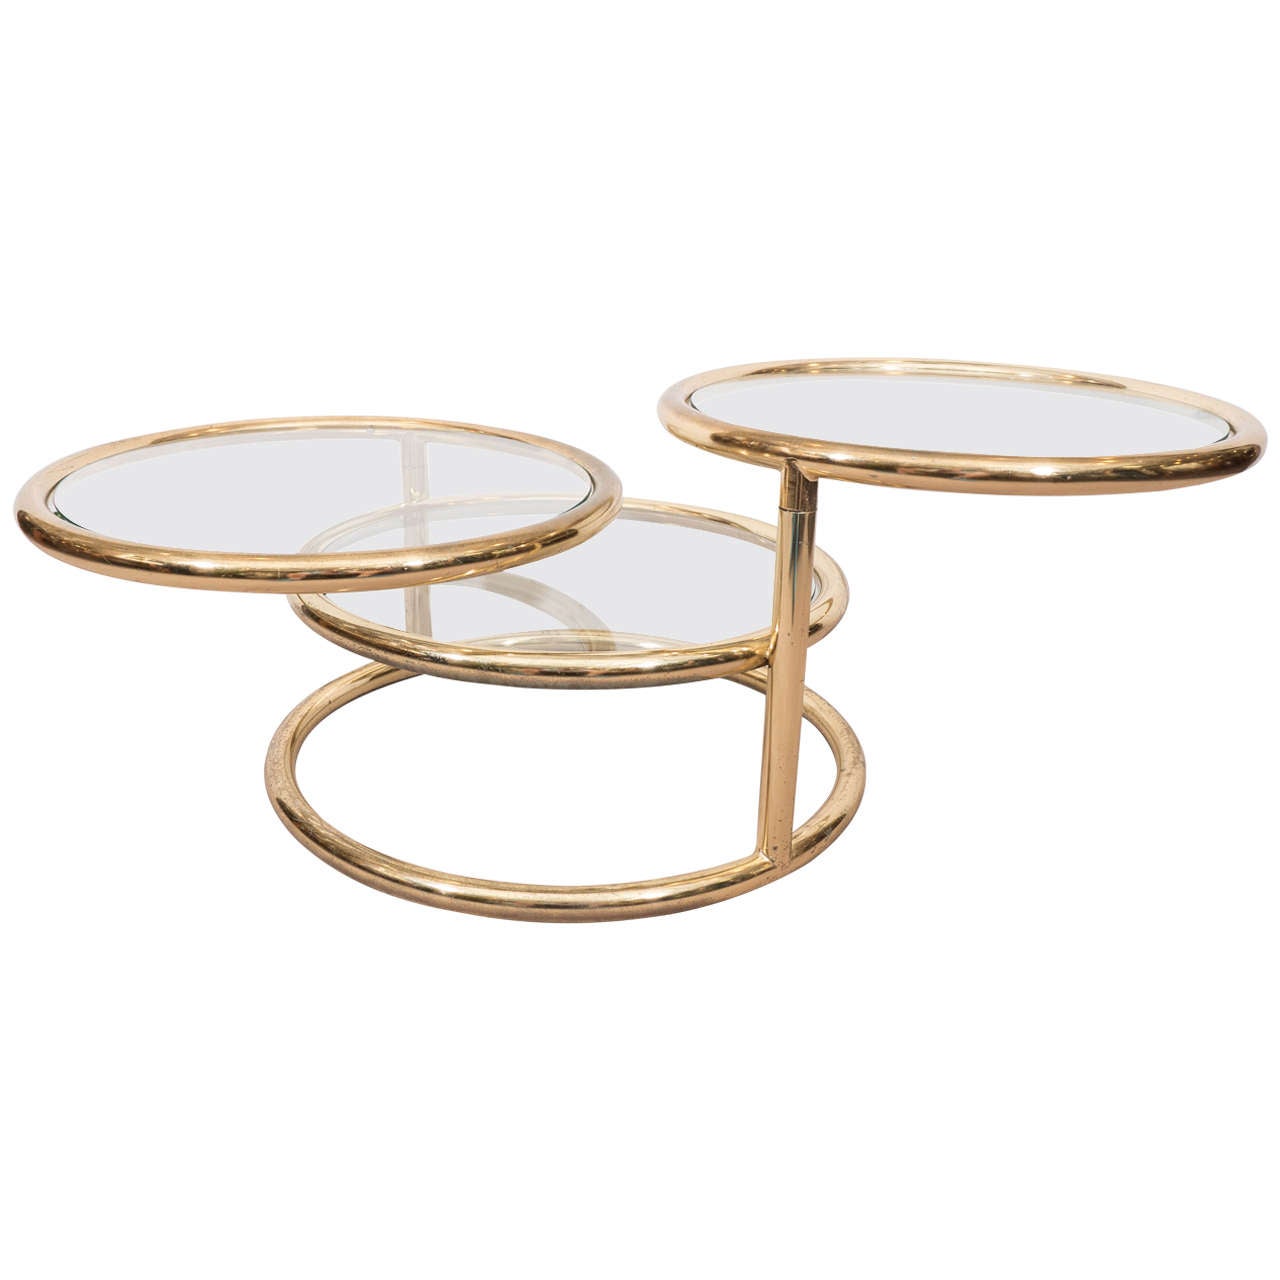 Milo Baughman Style Circular Three-Tier Swivel Coffee Table in Polished Brass